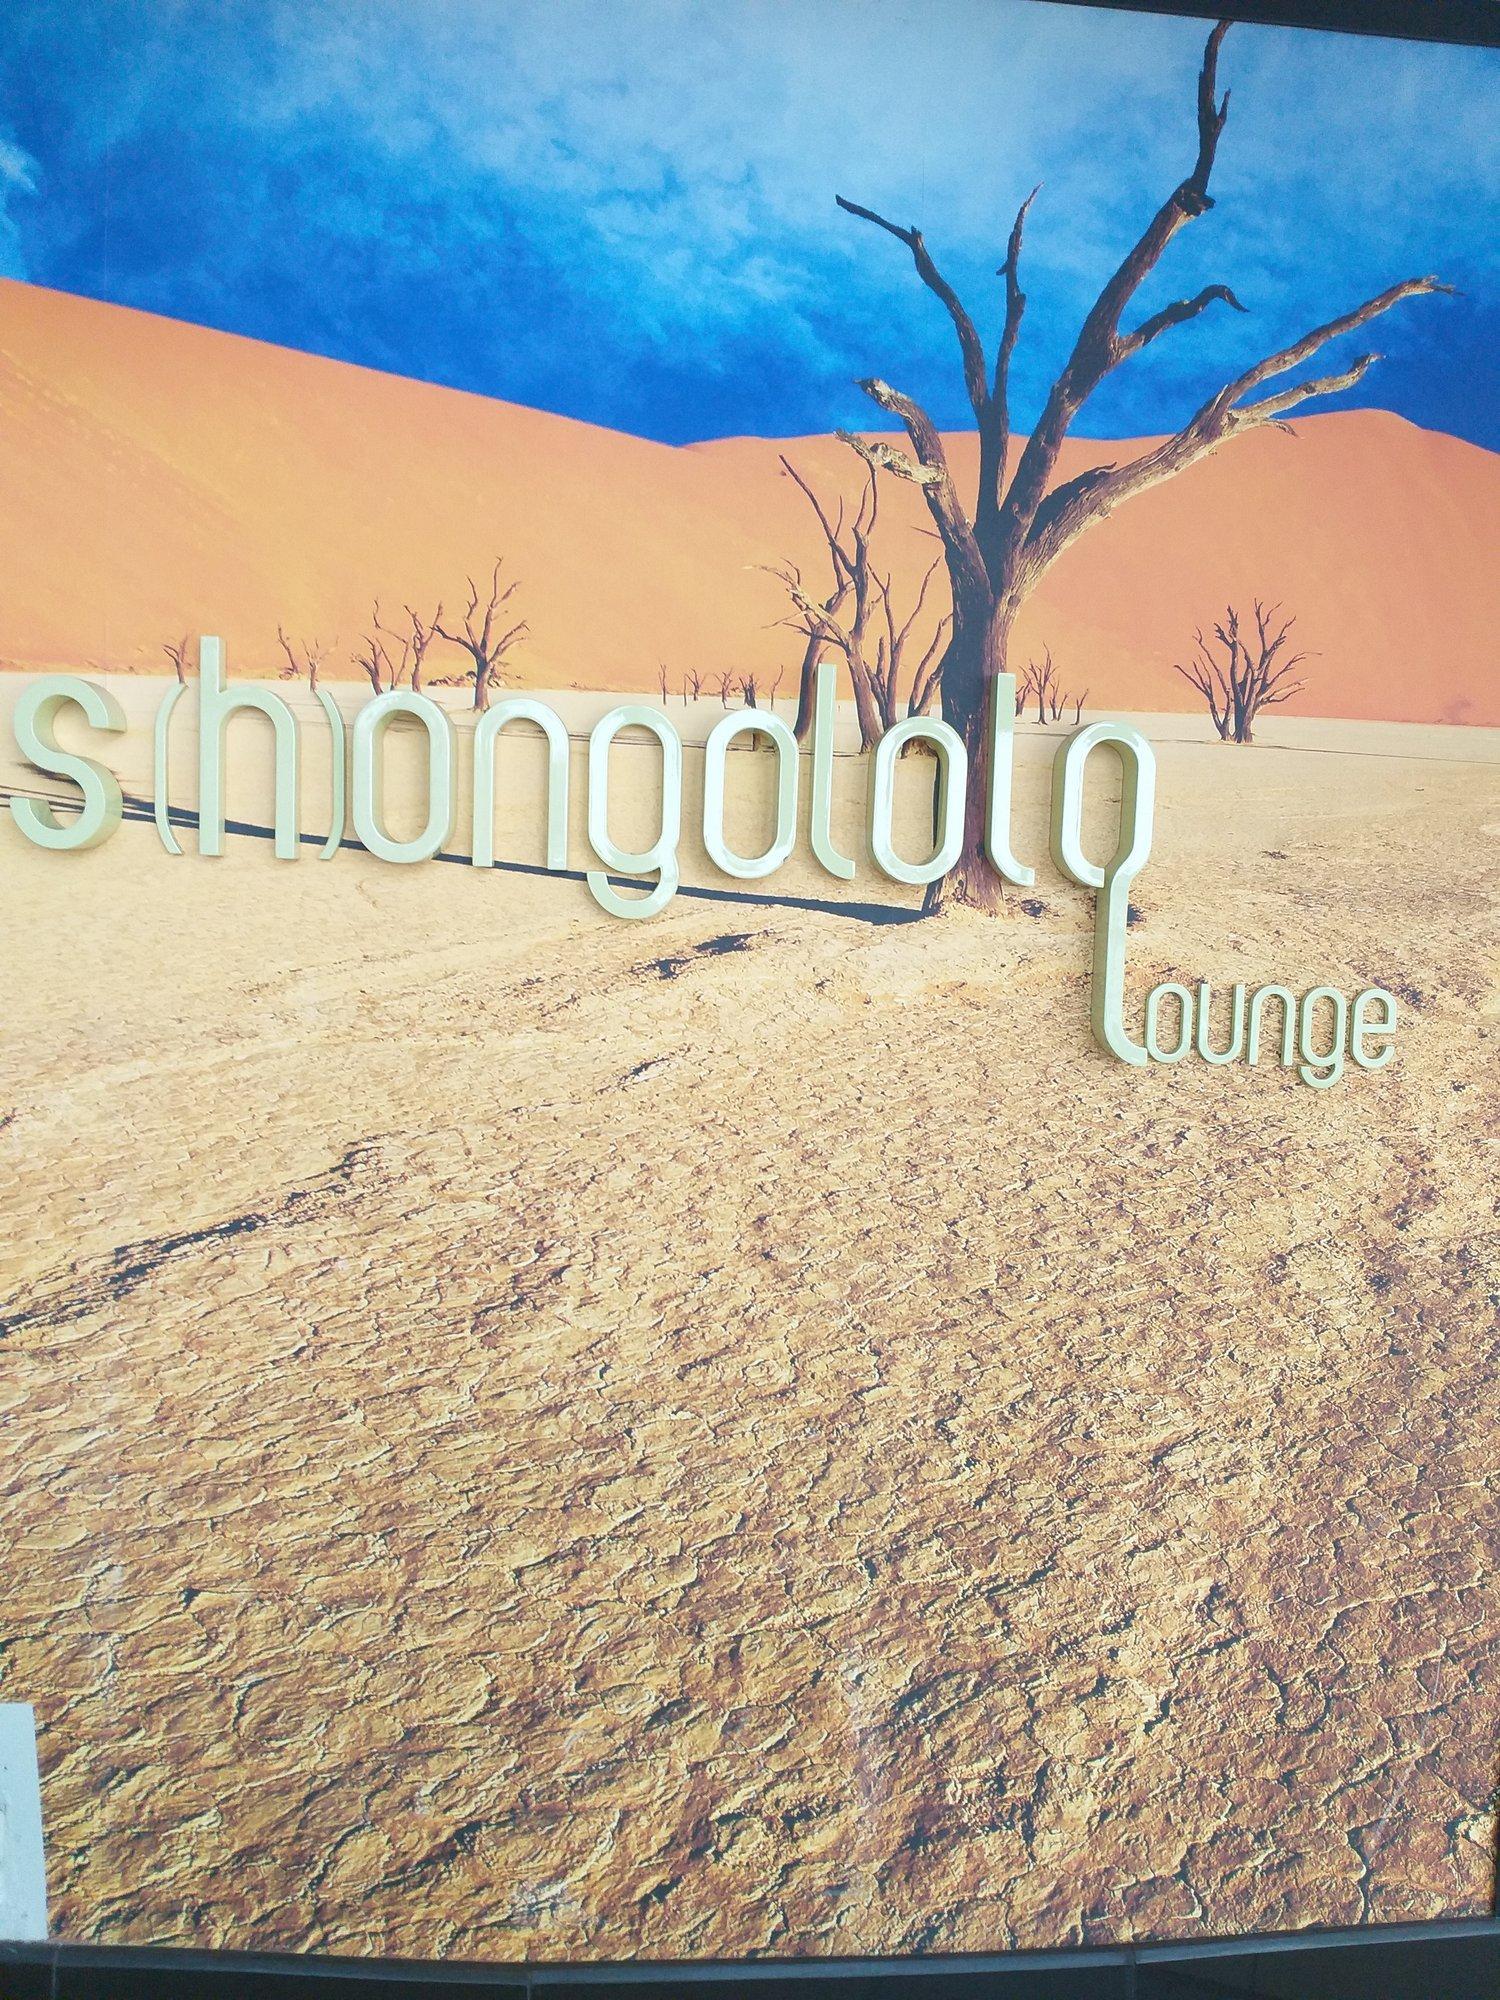 Shongololo Lounge image 60 of 69